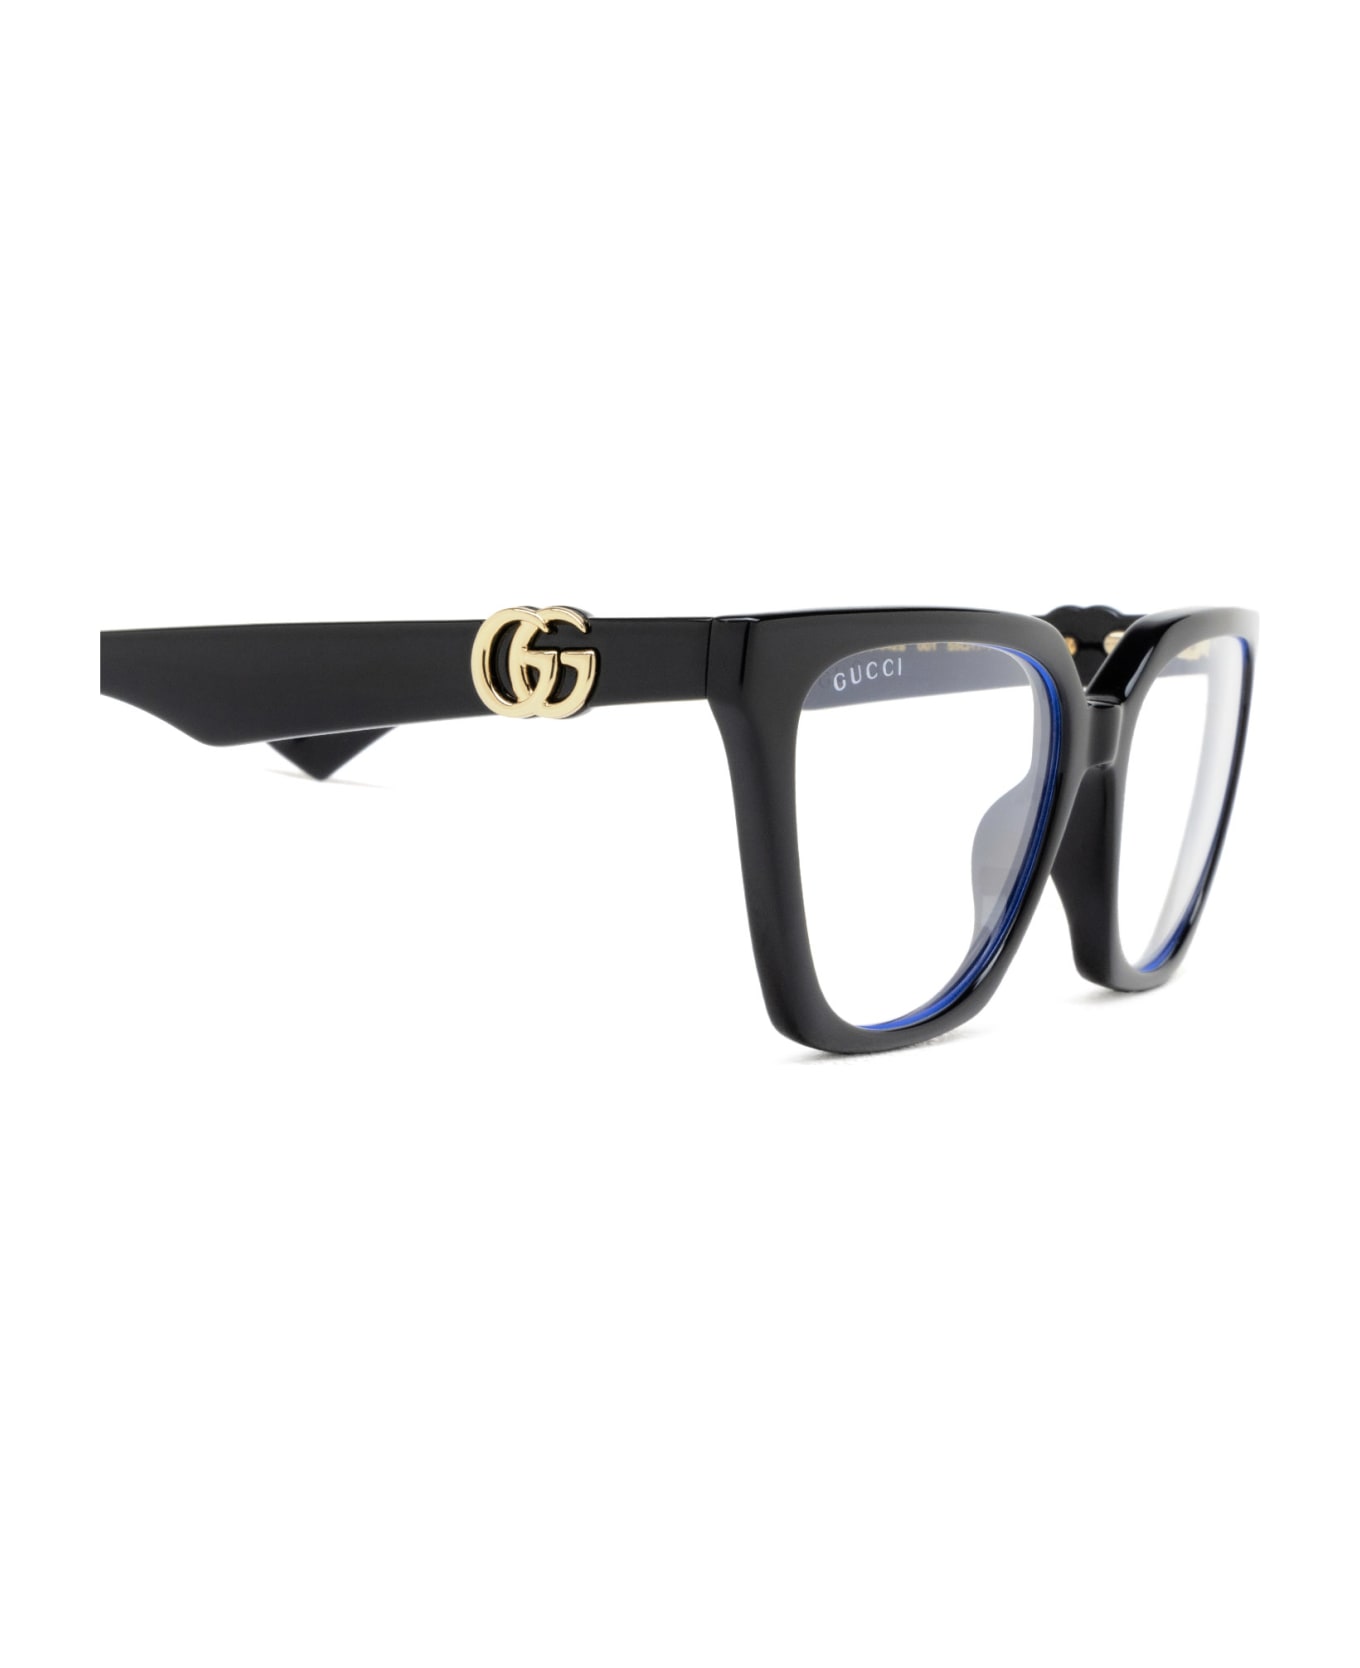 Gucci Eyewear Gg1542s Black Sunglasses - Black